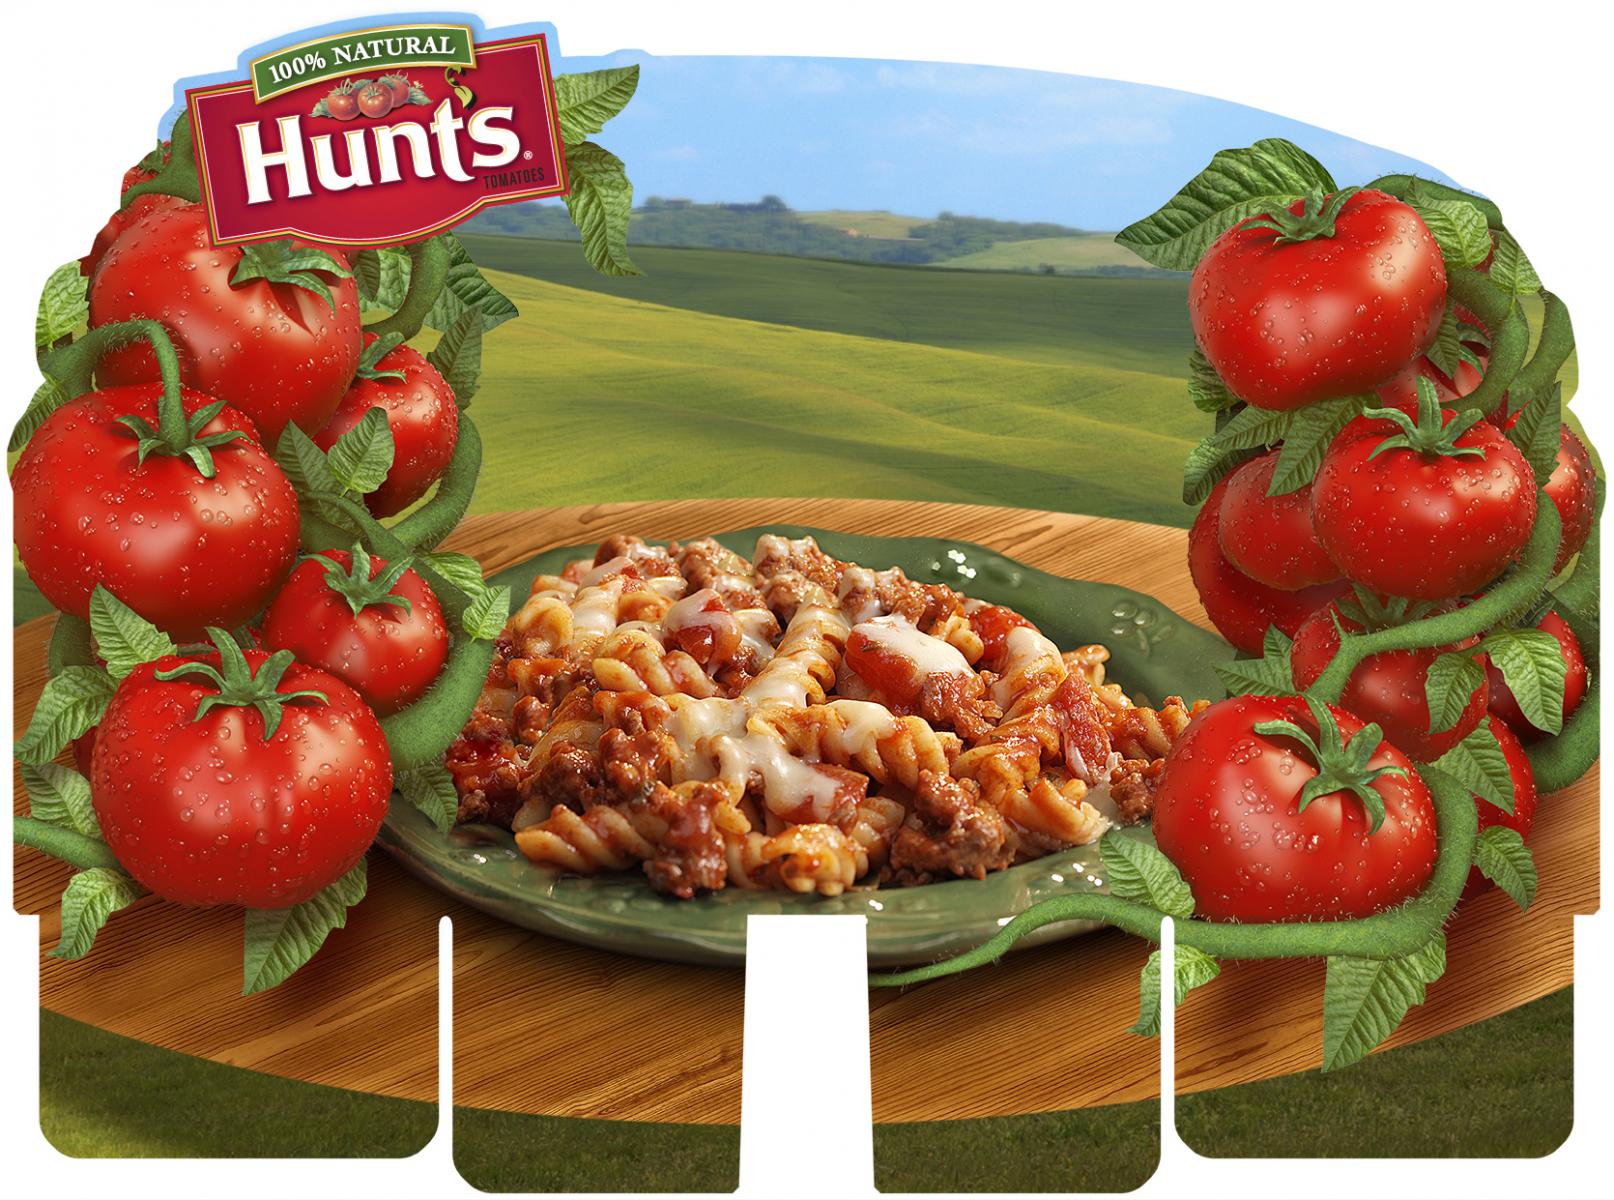 Hunts tomato paste